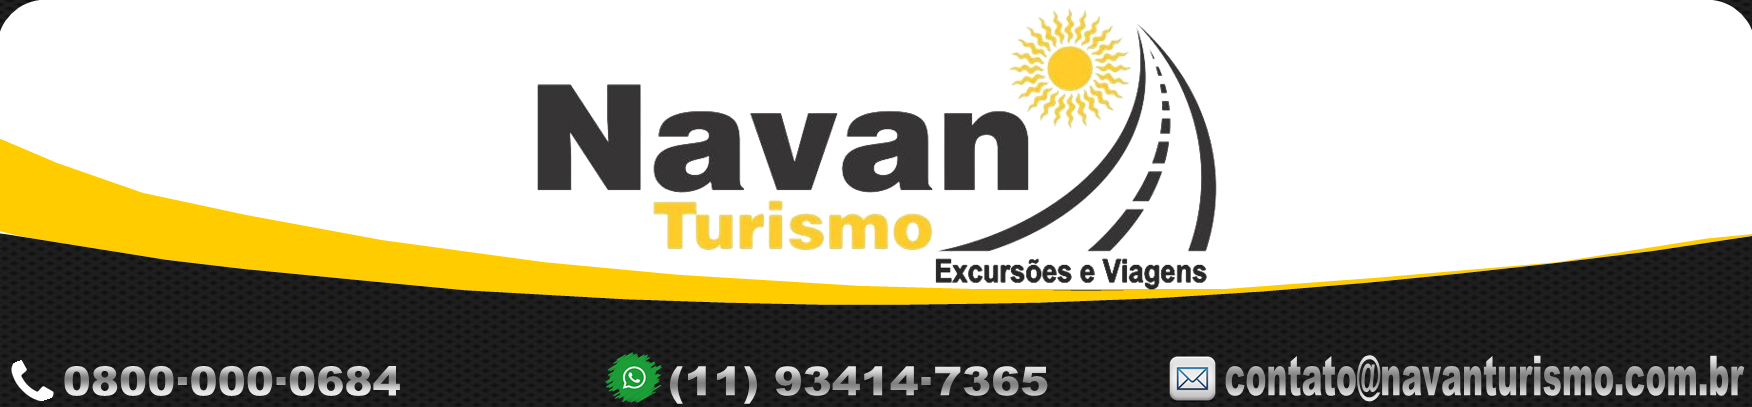 Navan Turismo